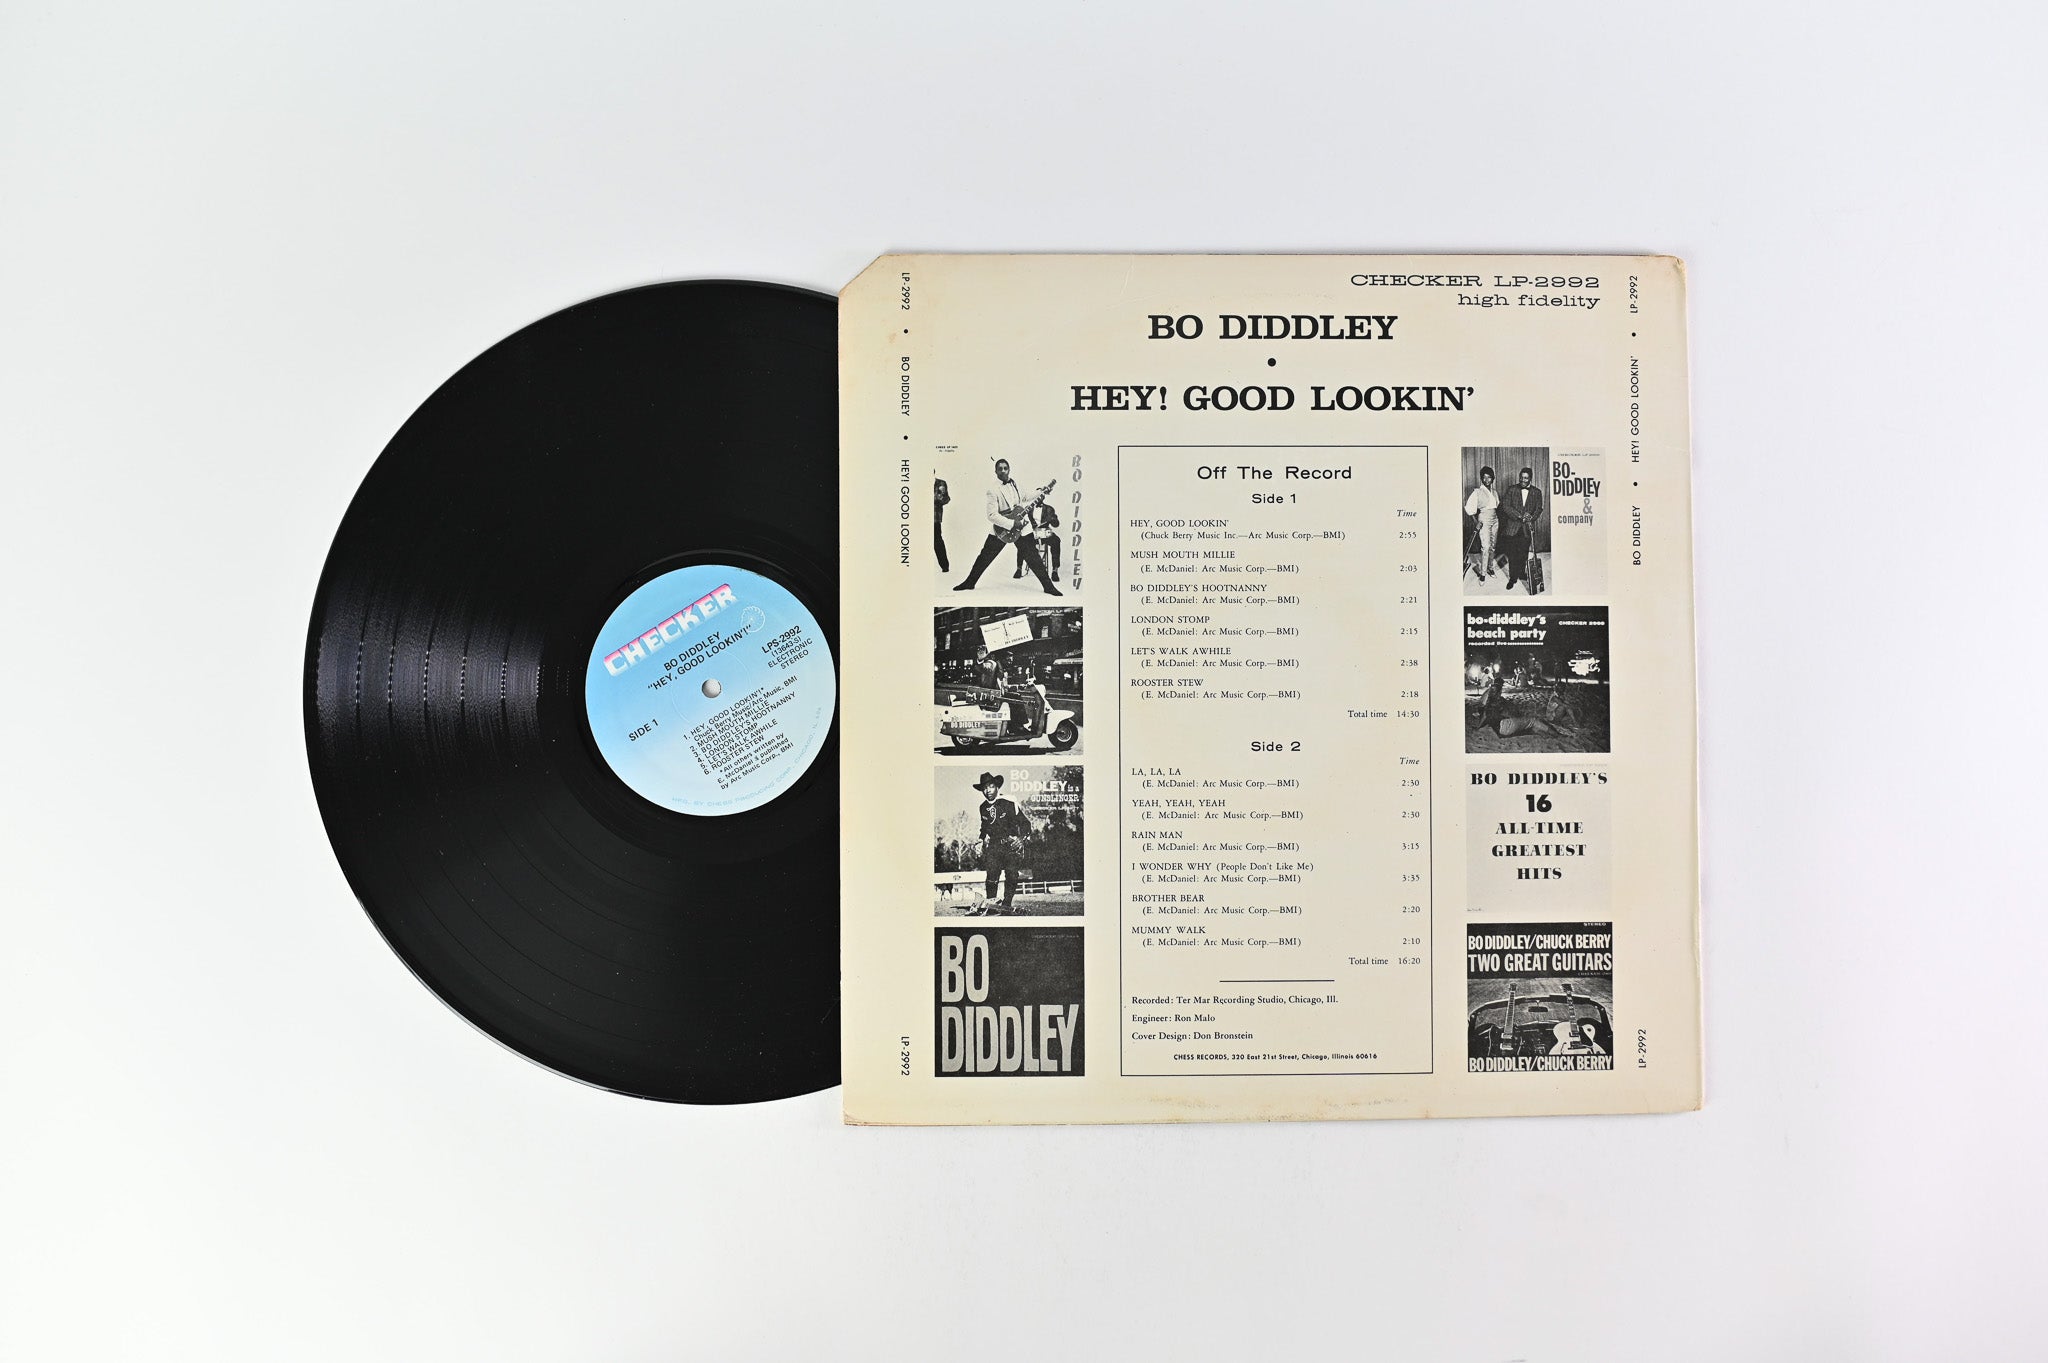 Bo Diddley - Hey! Good Lookin' on Checker